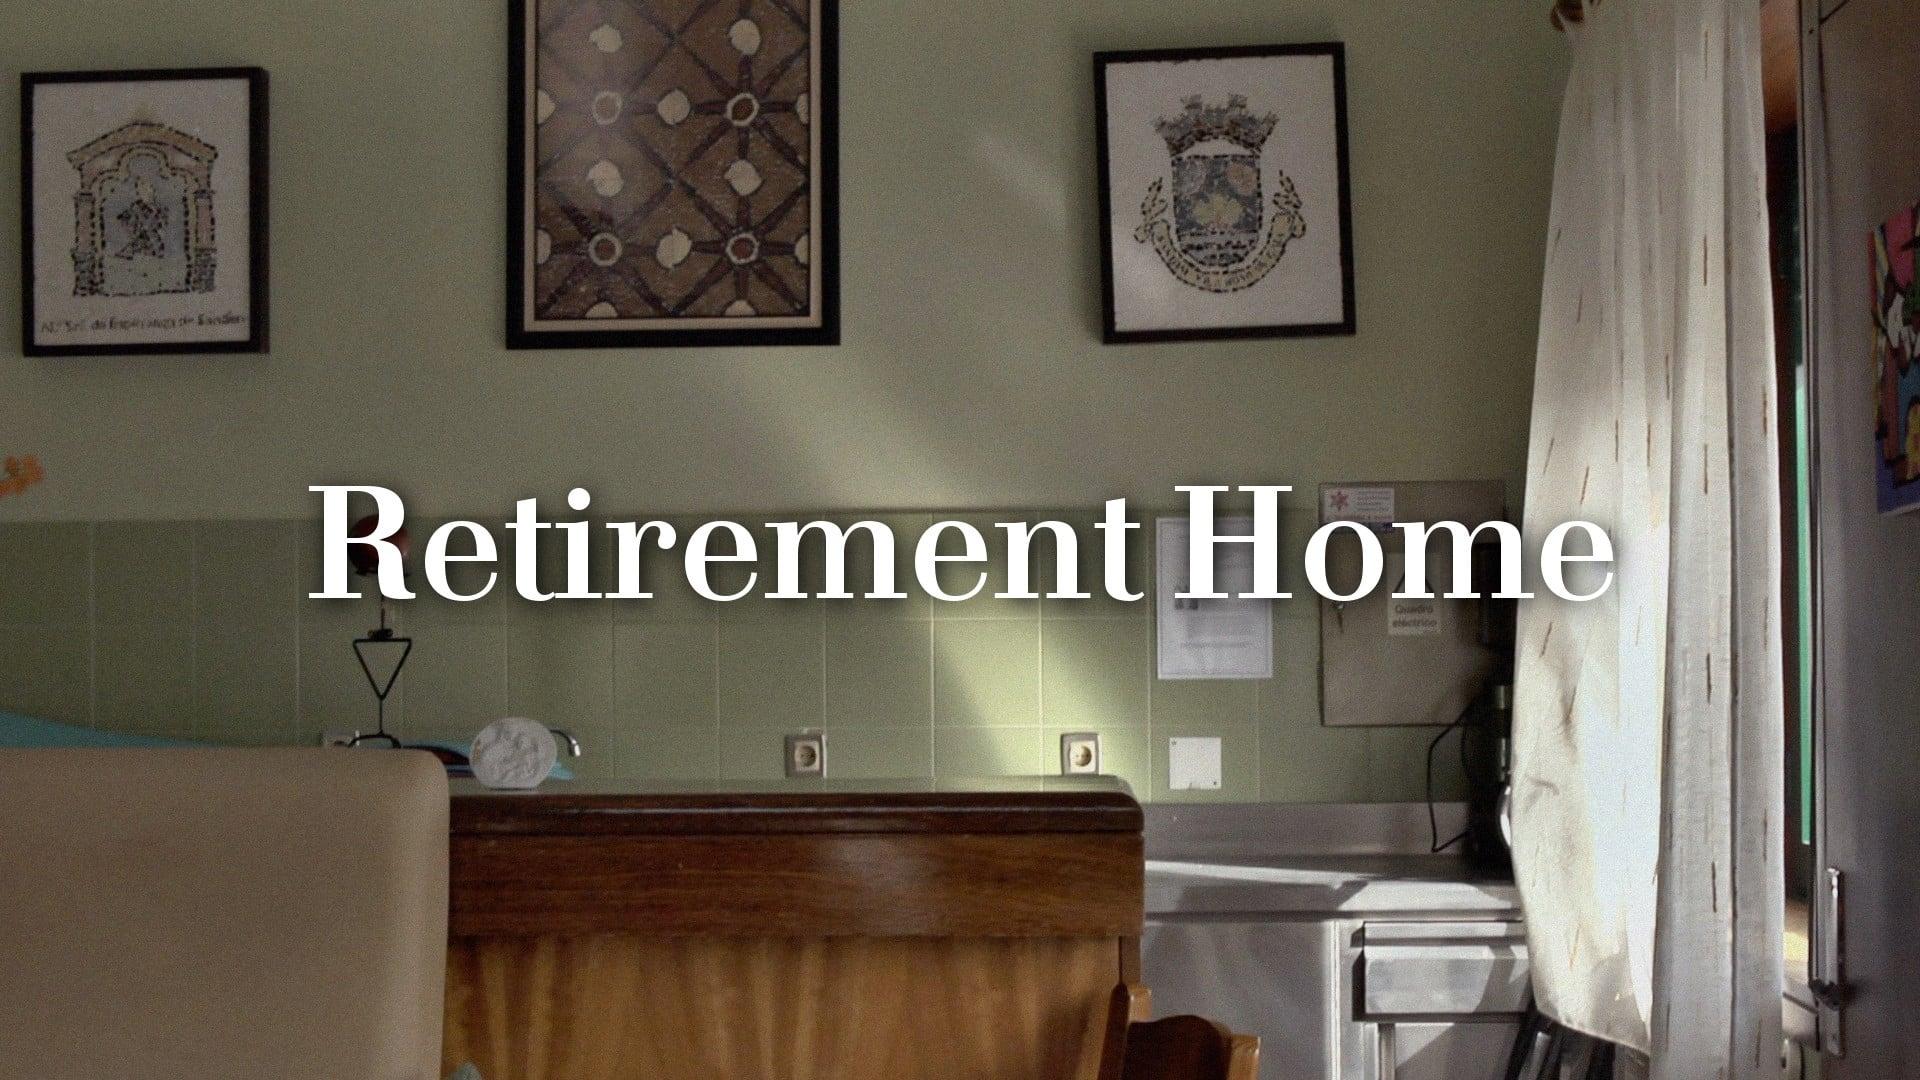 Retirement Home backdrop